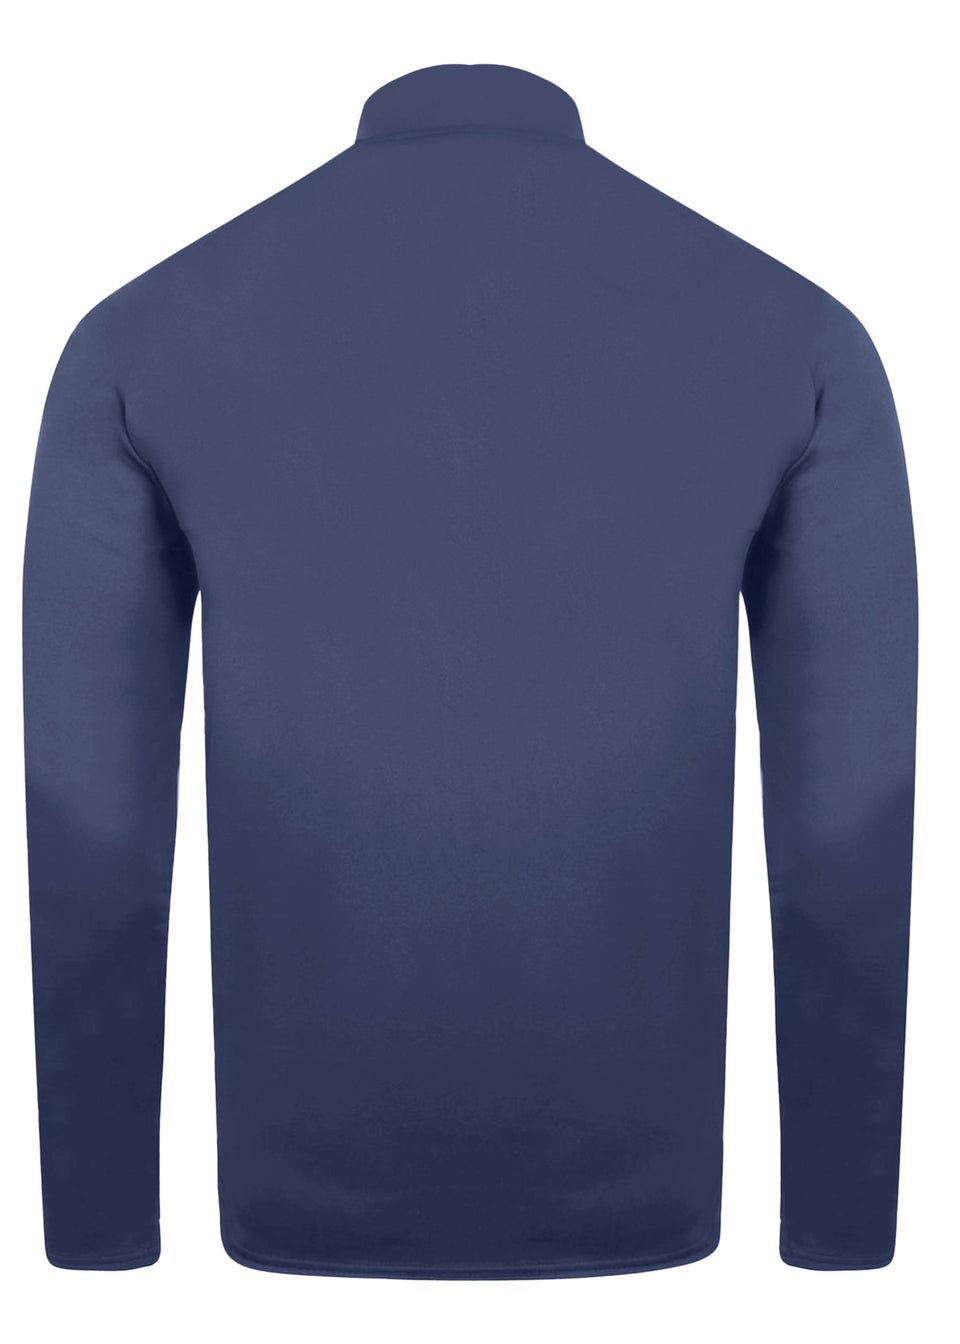 Umbro Kids Navy Club Essential Half Zip Sweatshirt (7-13yrs)